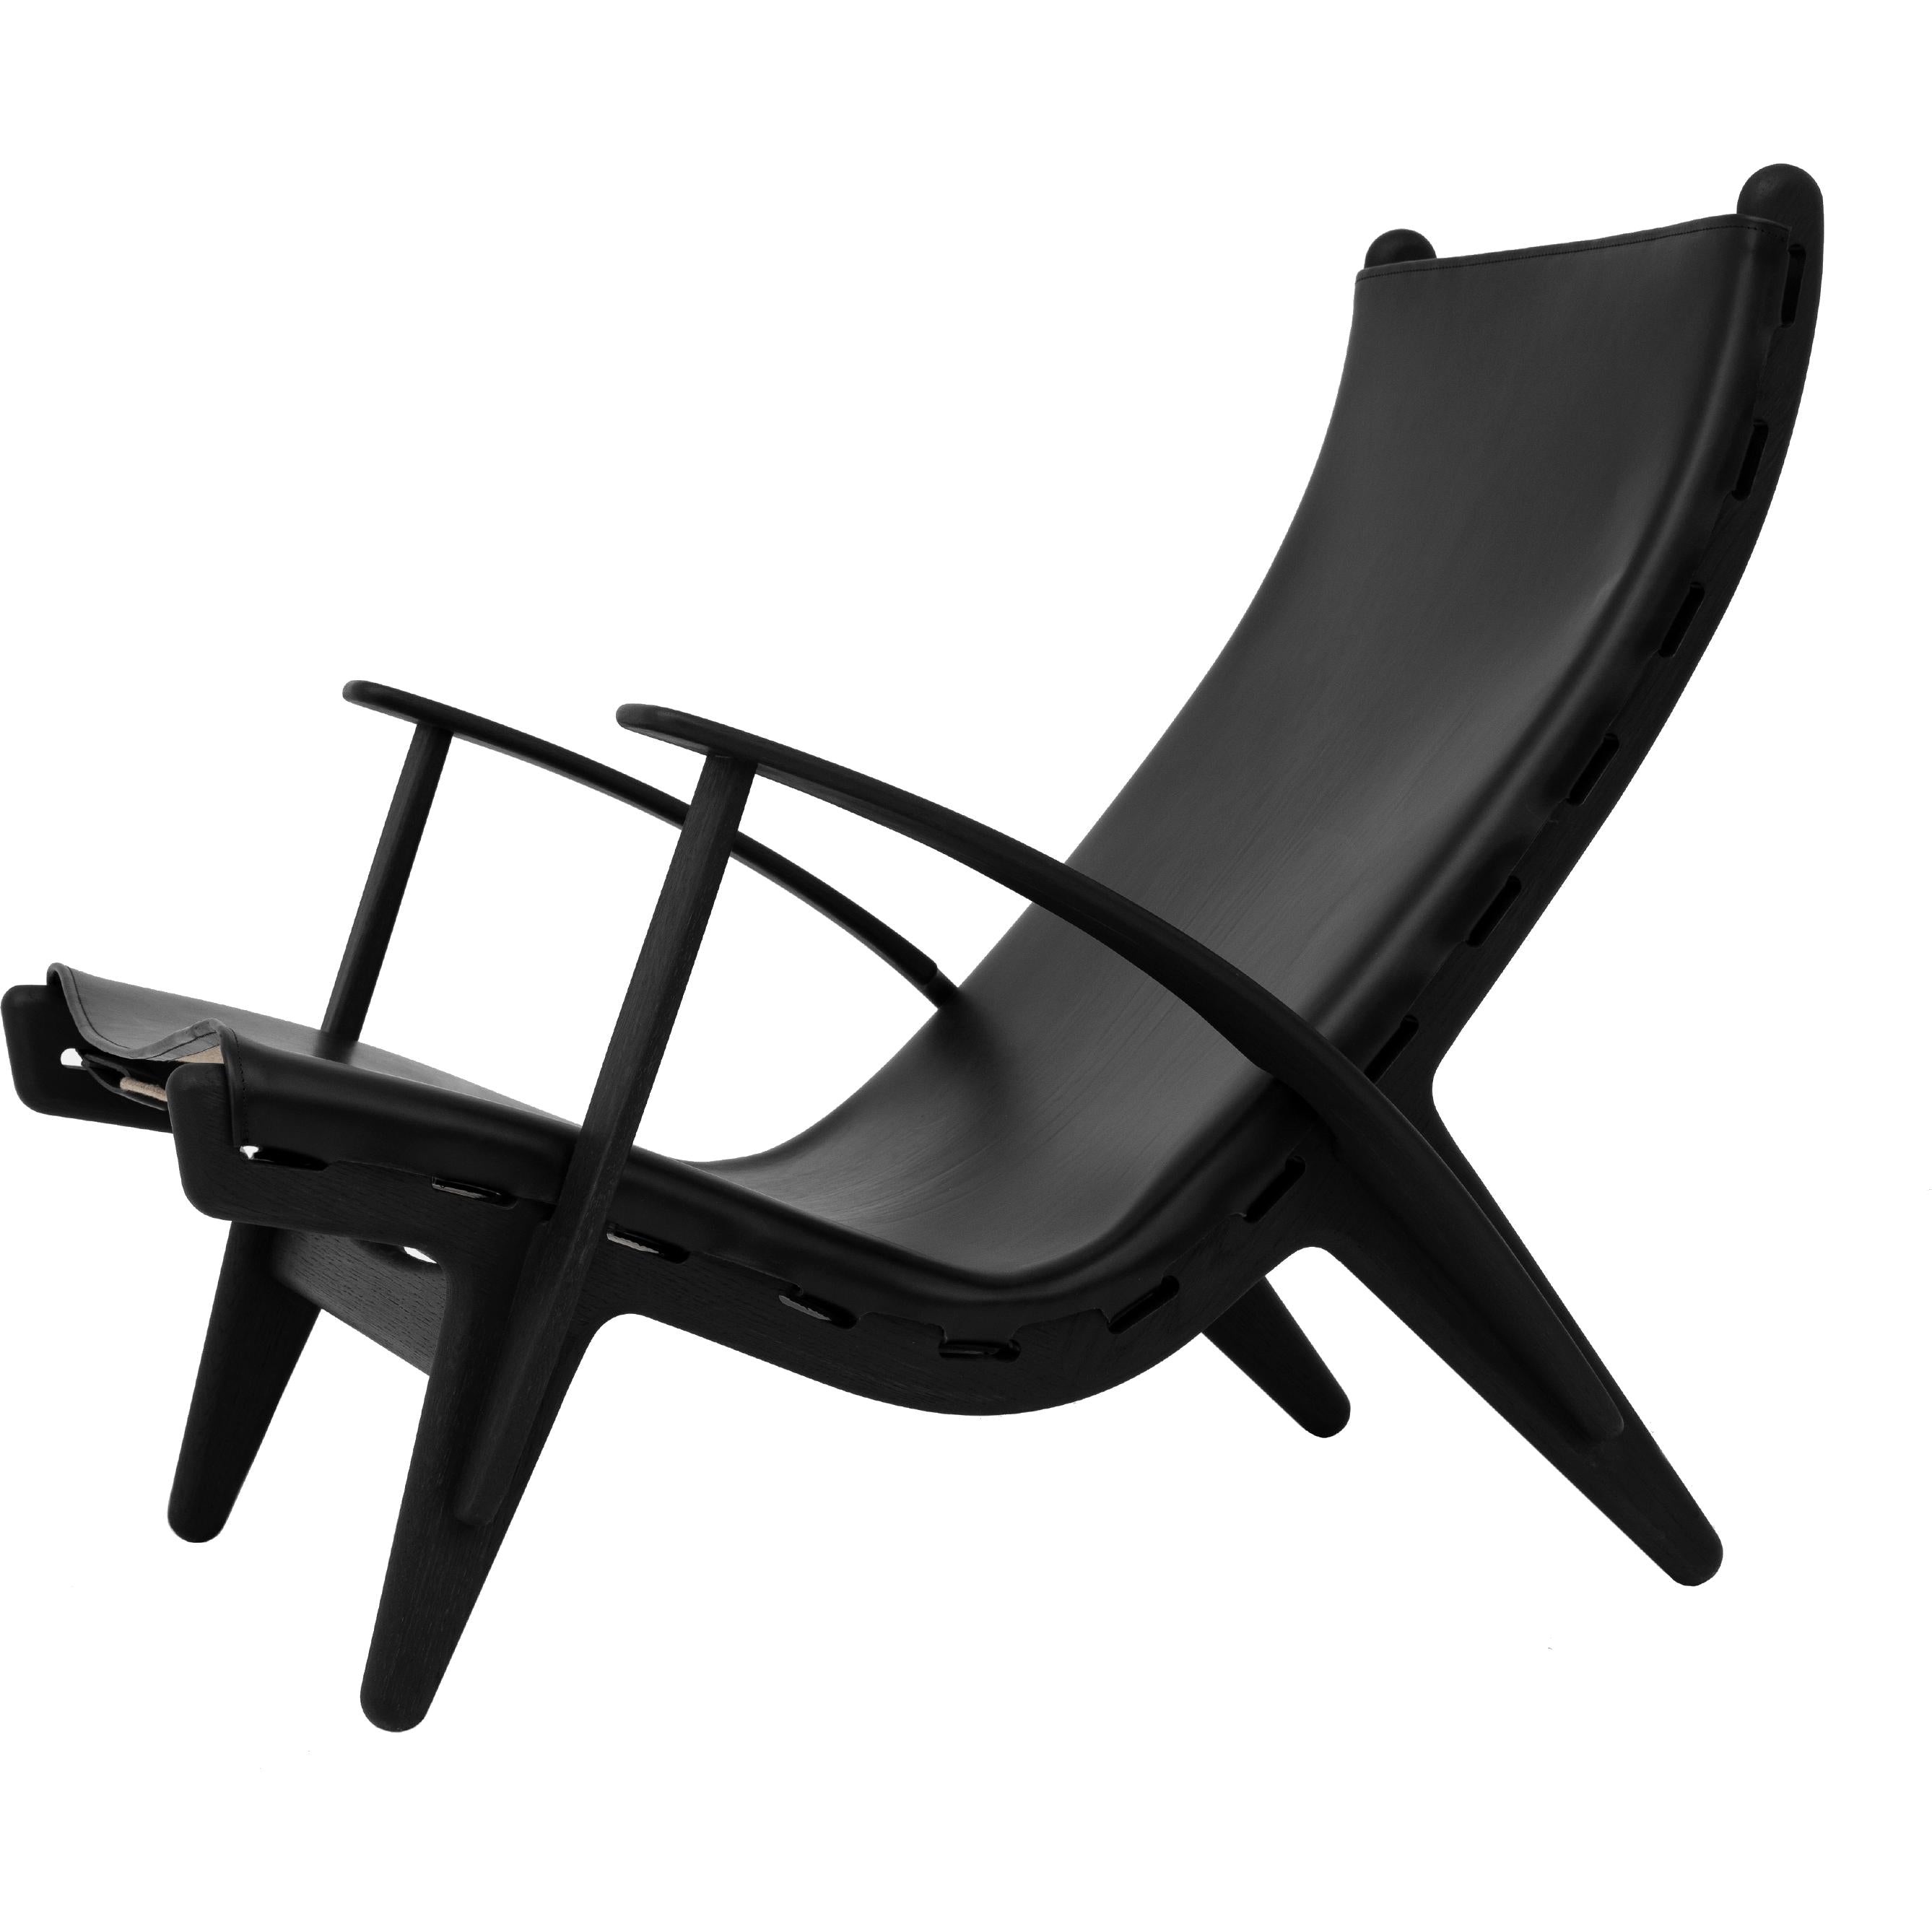 Klassik Studio PV King's stol svart ek färgad, svart läder